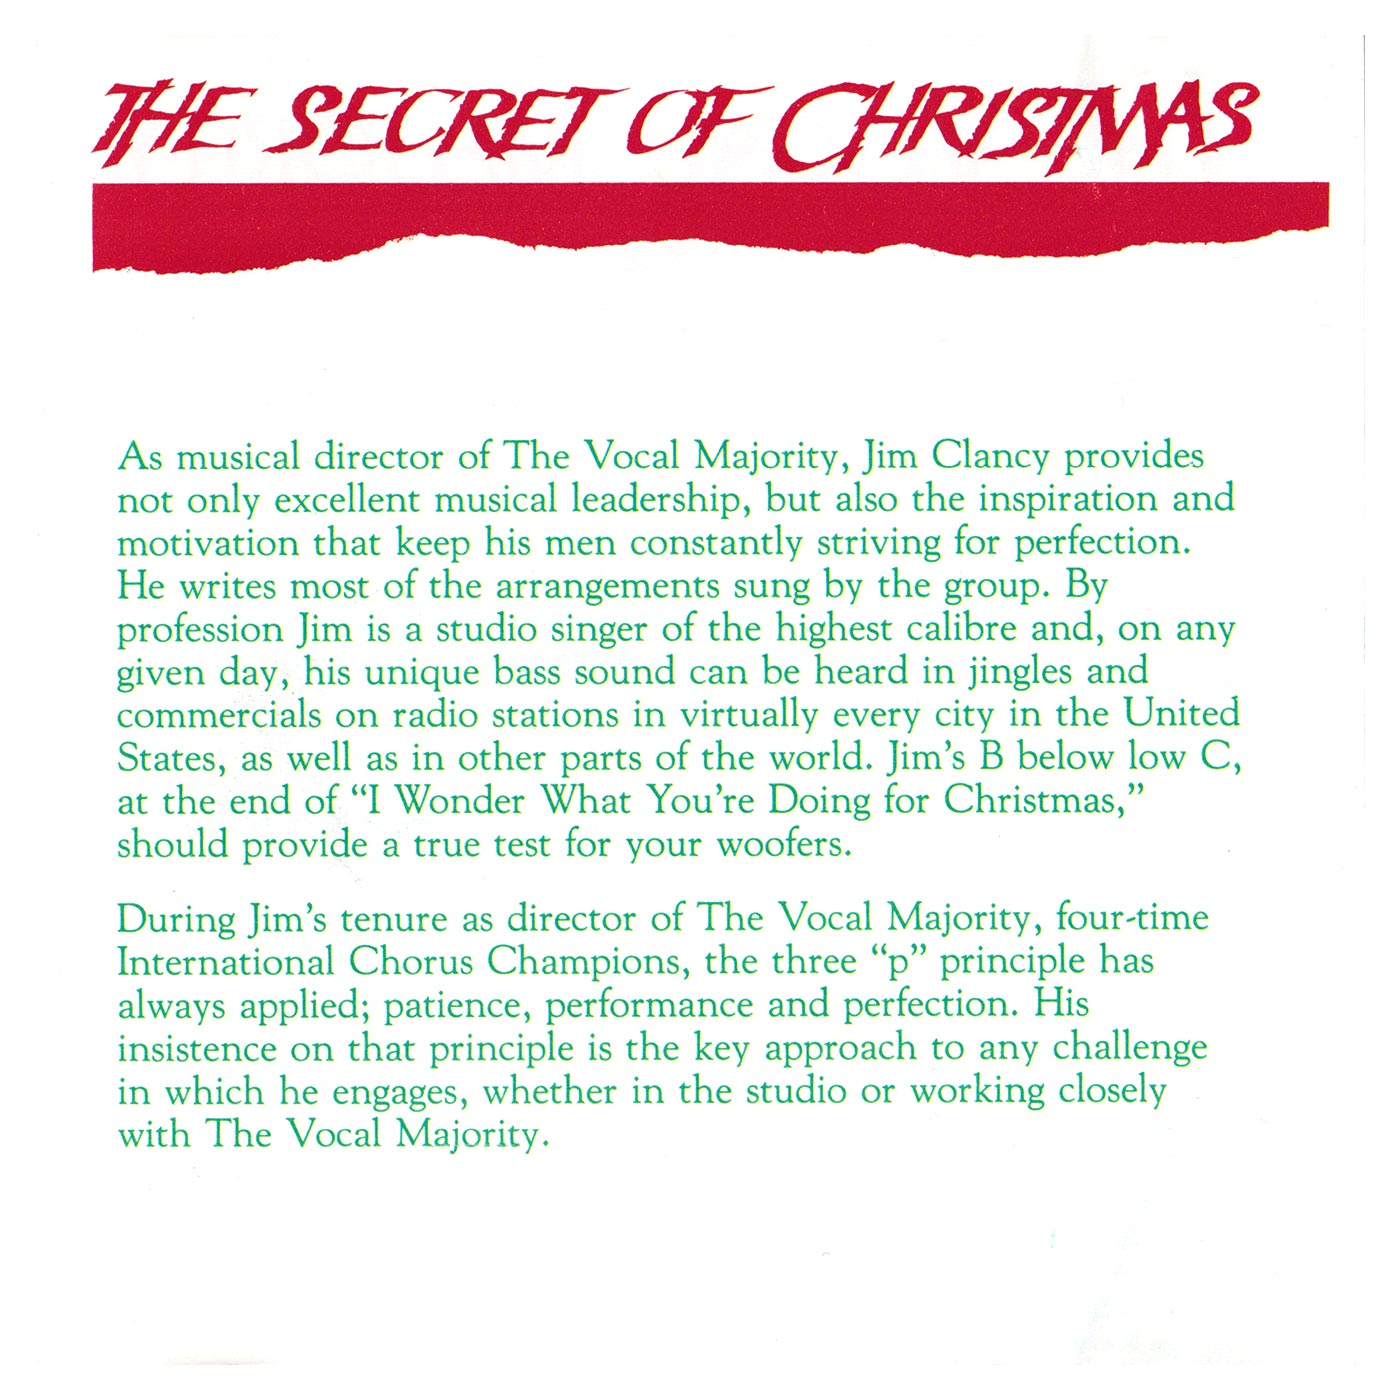 Booklet Inside Right Panel: The Secret of Christmas